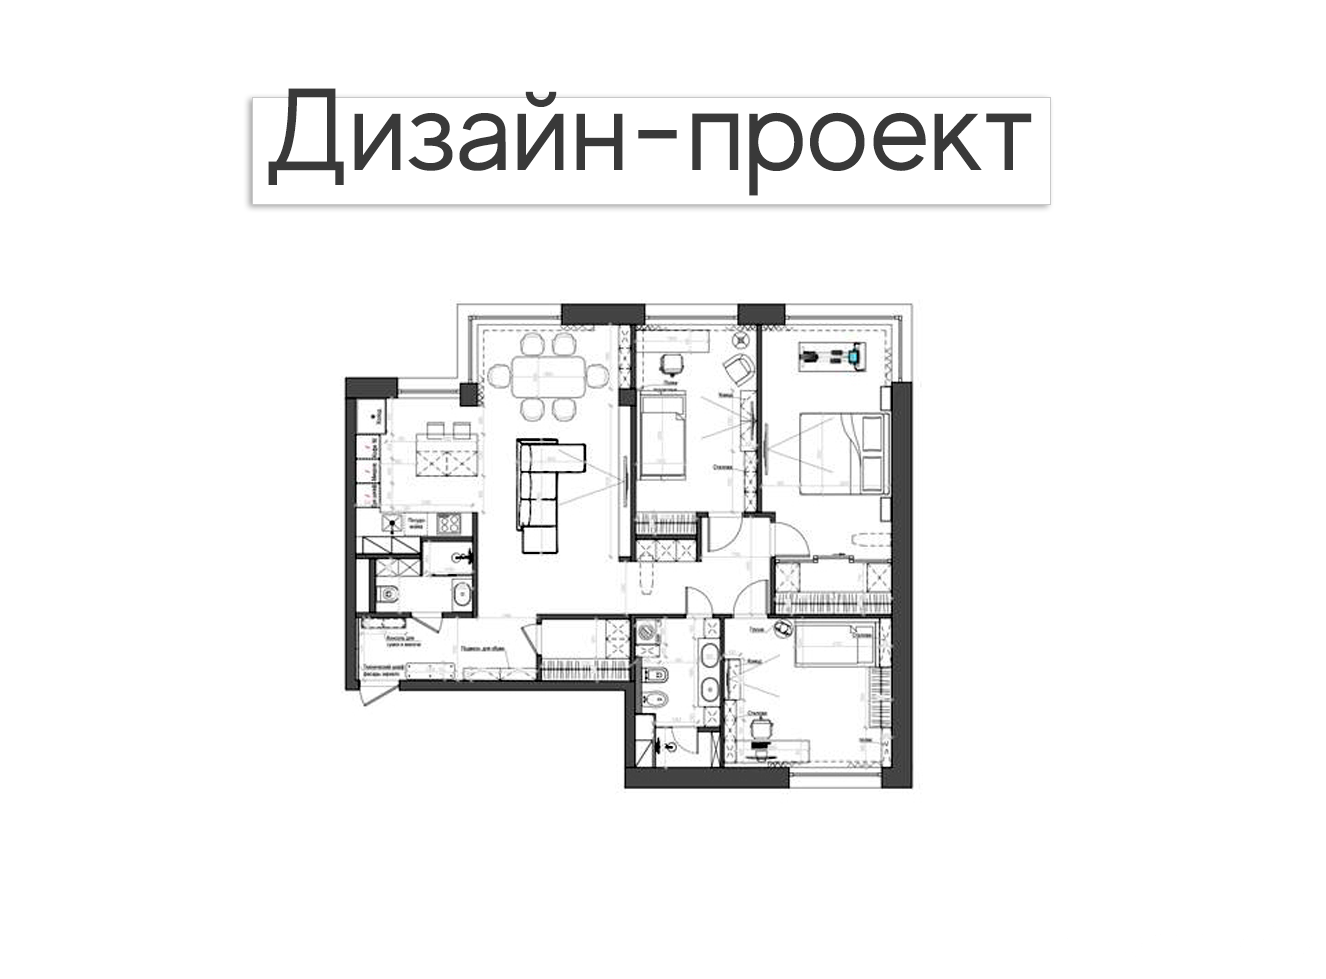 продажа квартиры, Минск, ул. Ржавецкая, д. 47